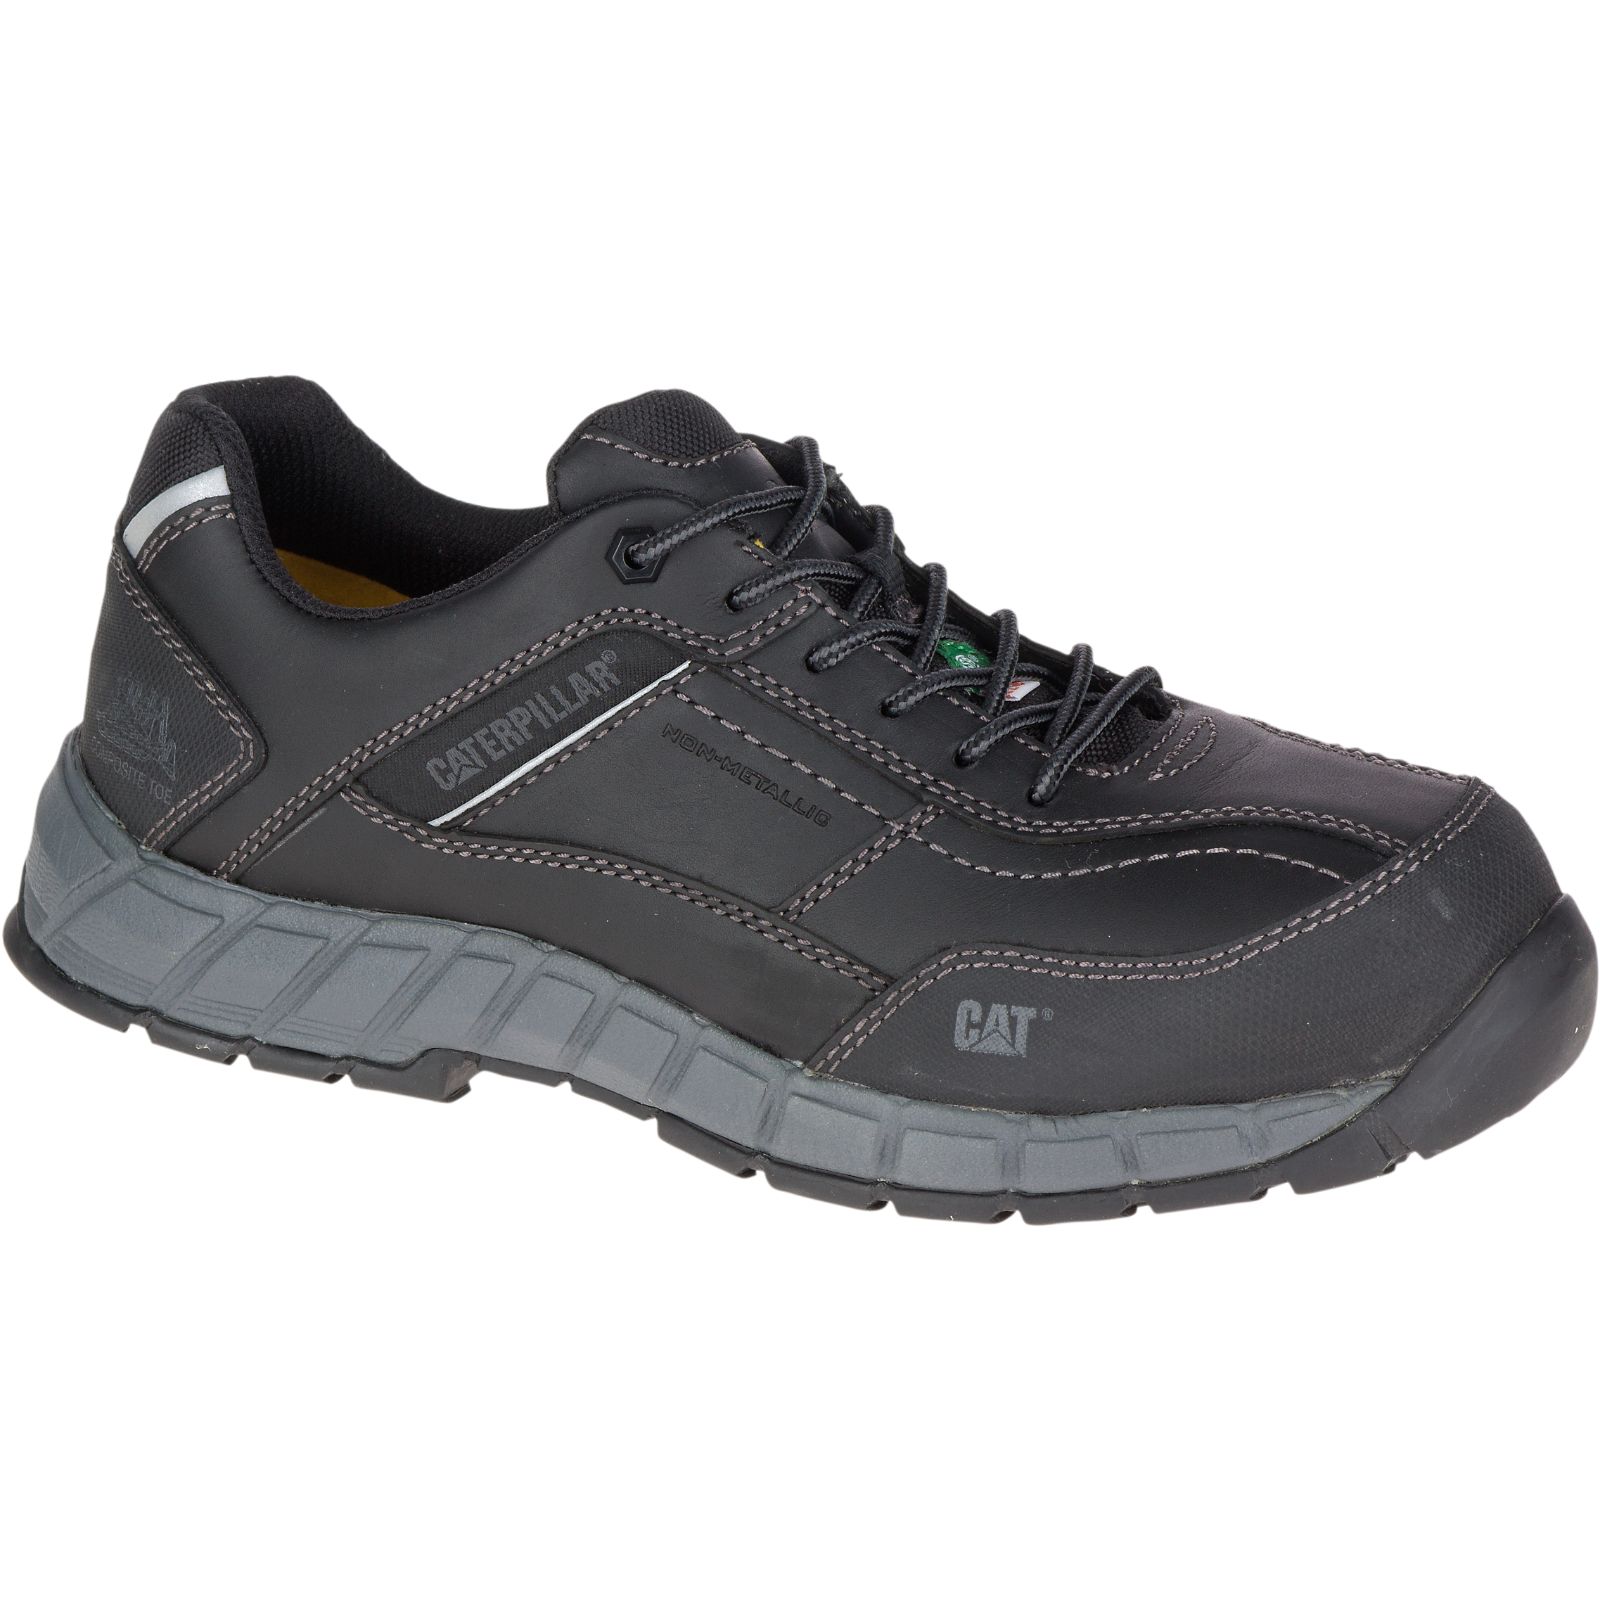 Black Caterpillar Streamline Leather Csa Composite Toe Men's Work Shoes | Cat-951320